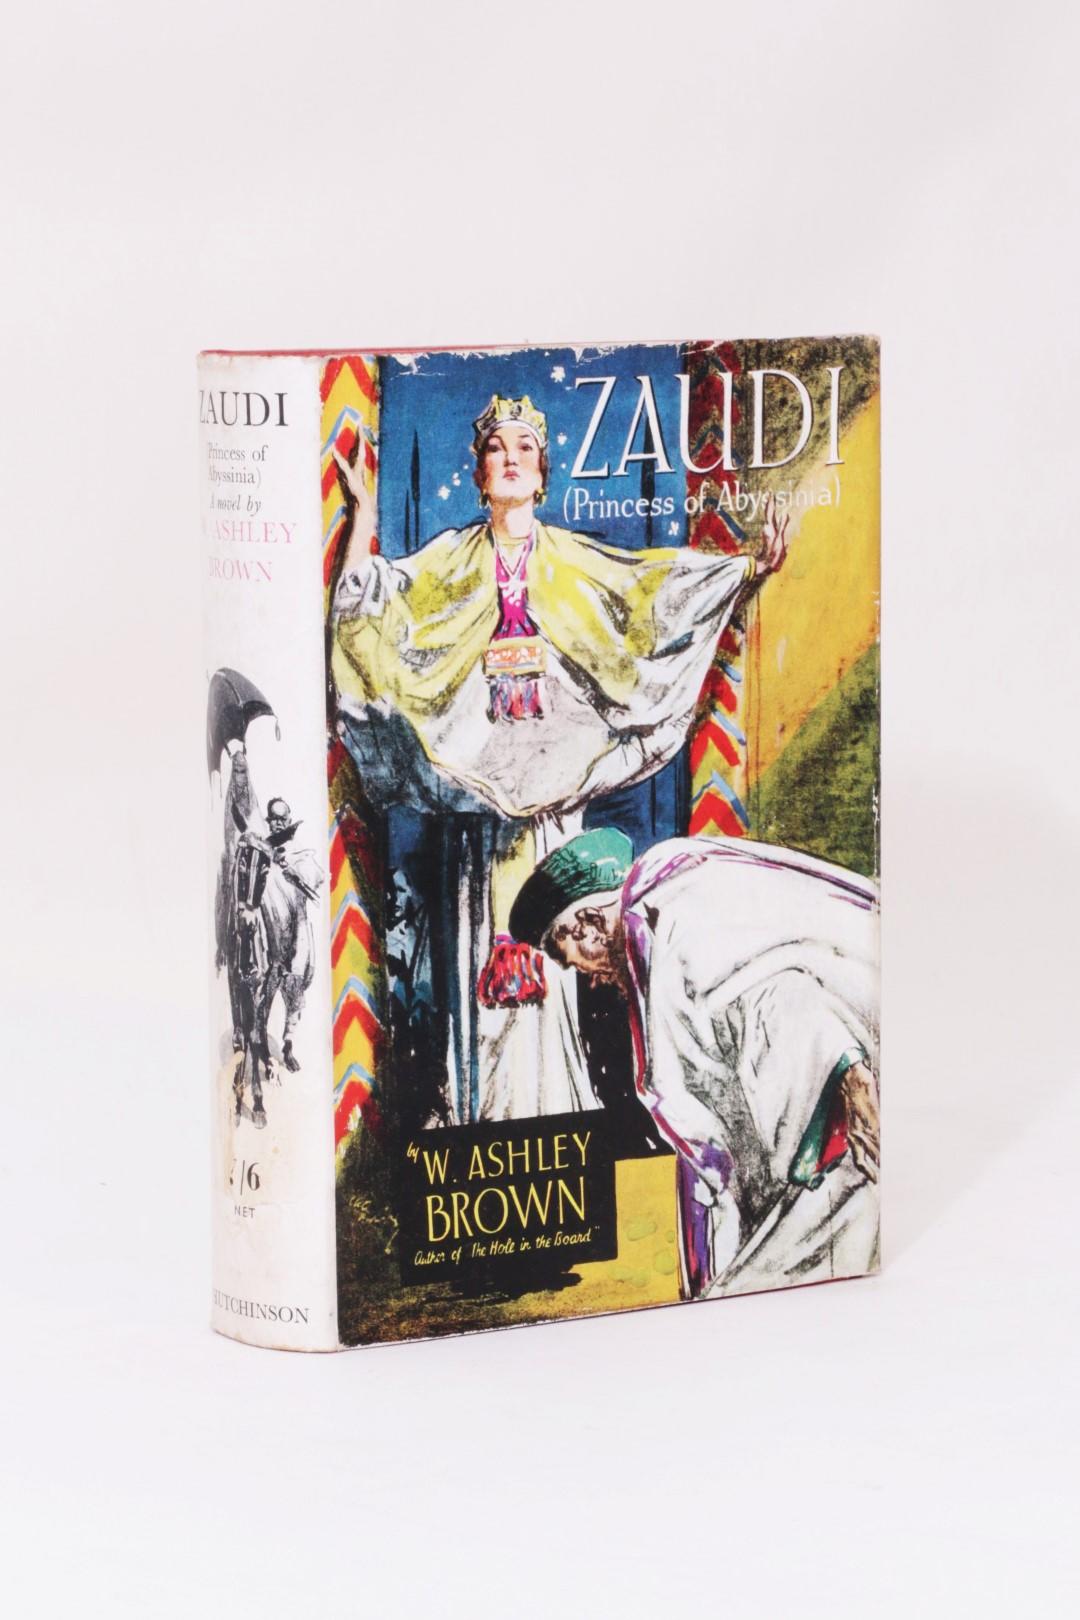 W.Ashley Brown - Zaudi (Princess of Abyssinia) - Hutchinson, 1936, First Edition.